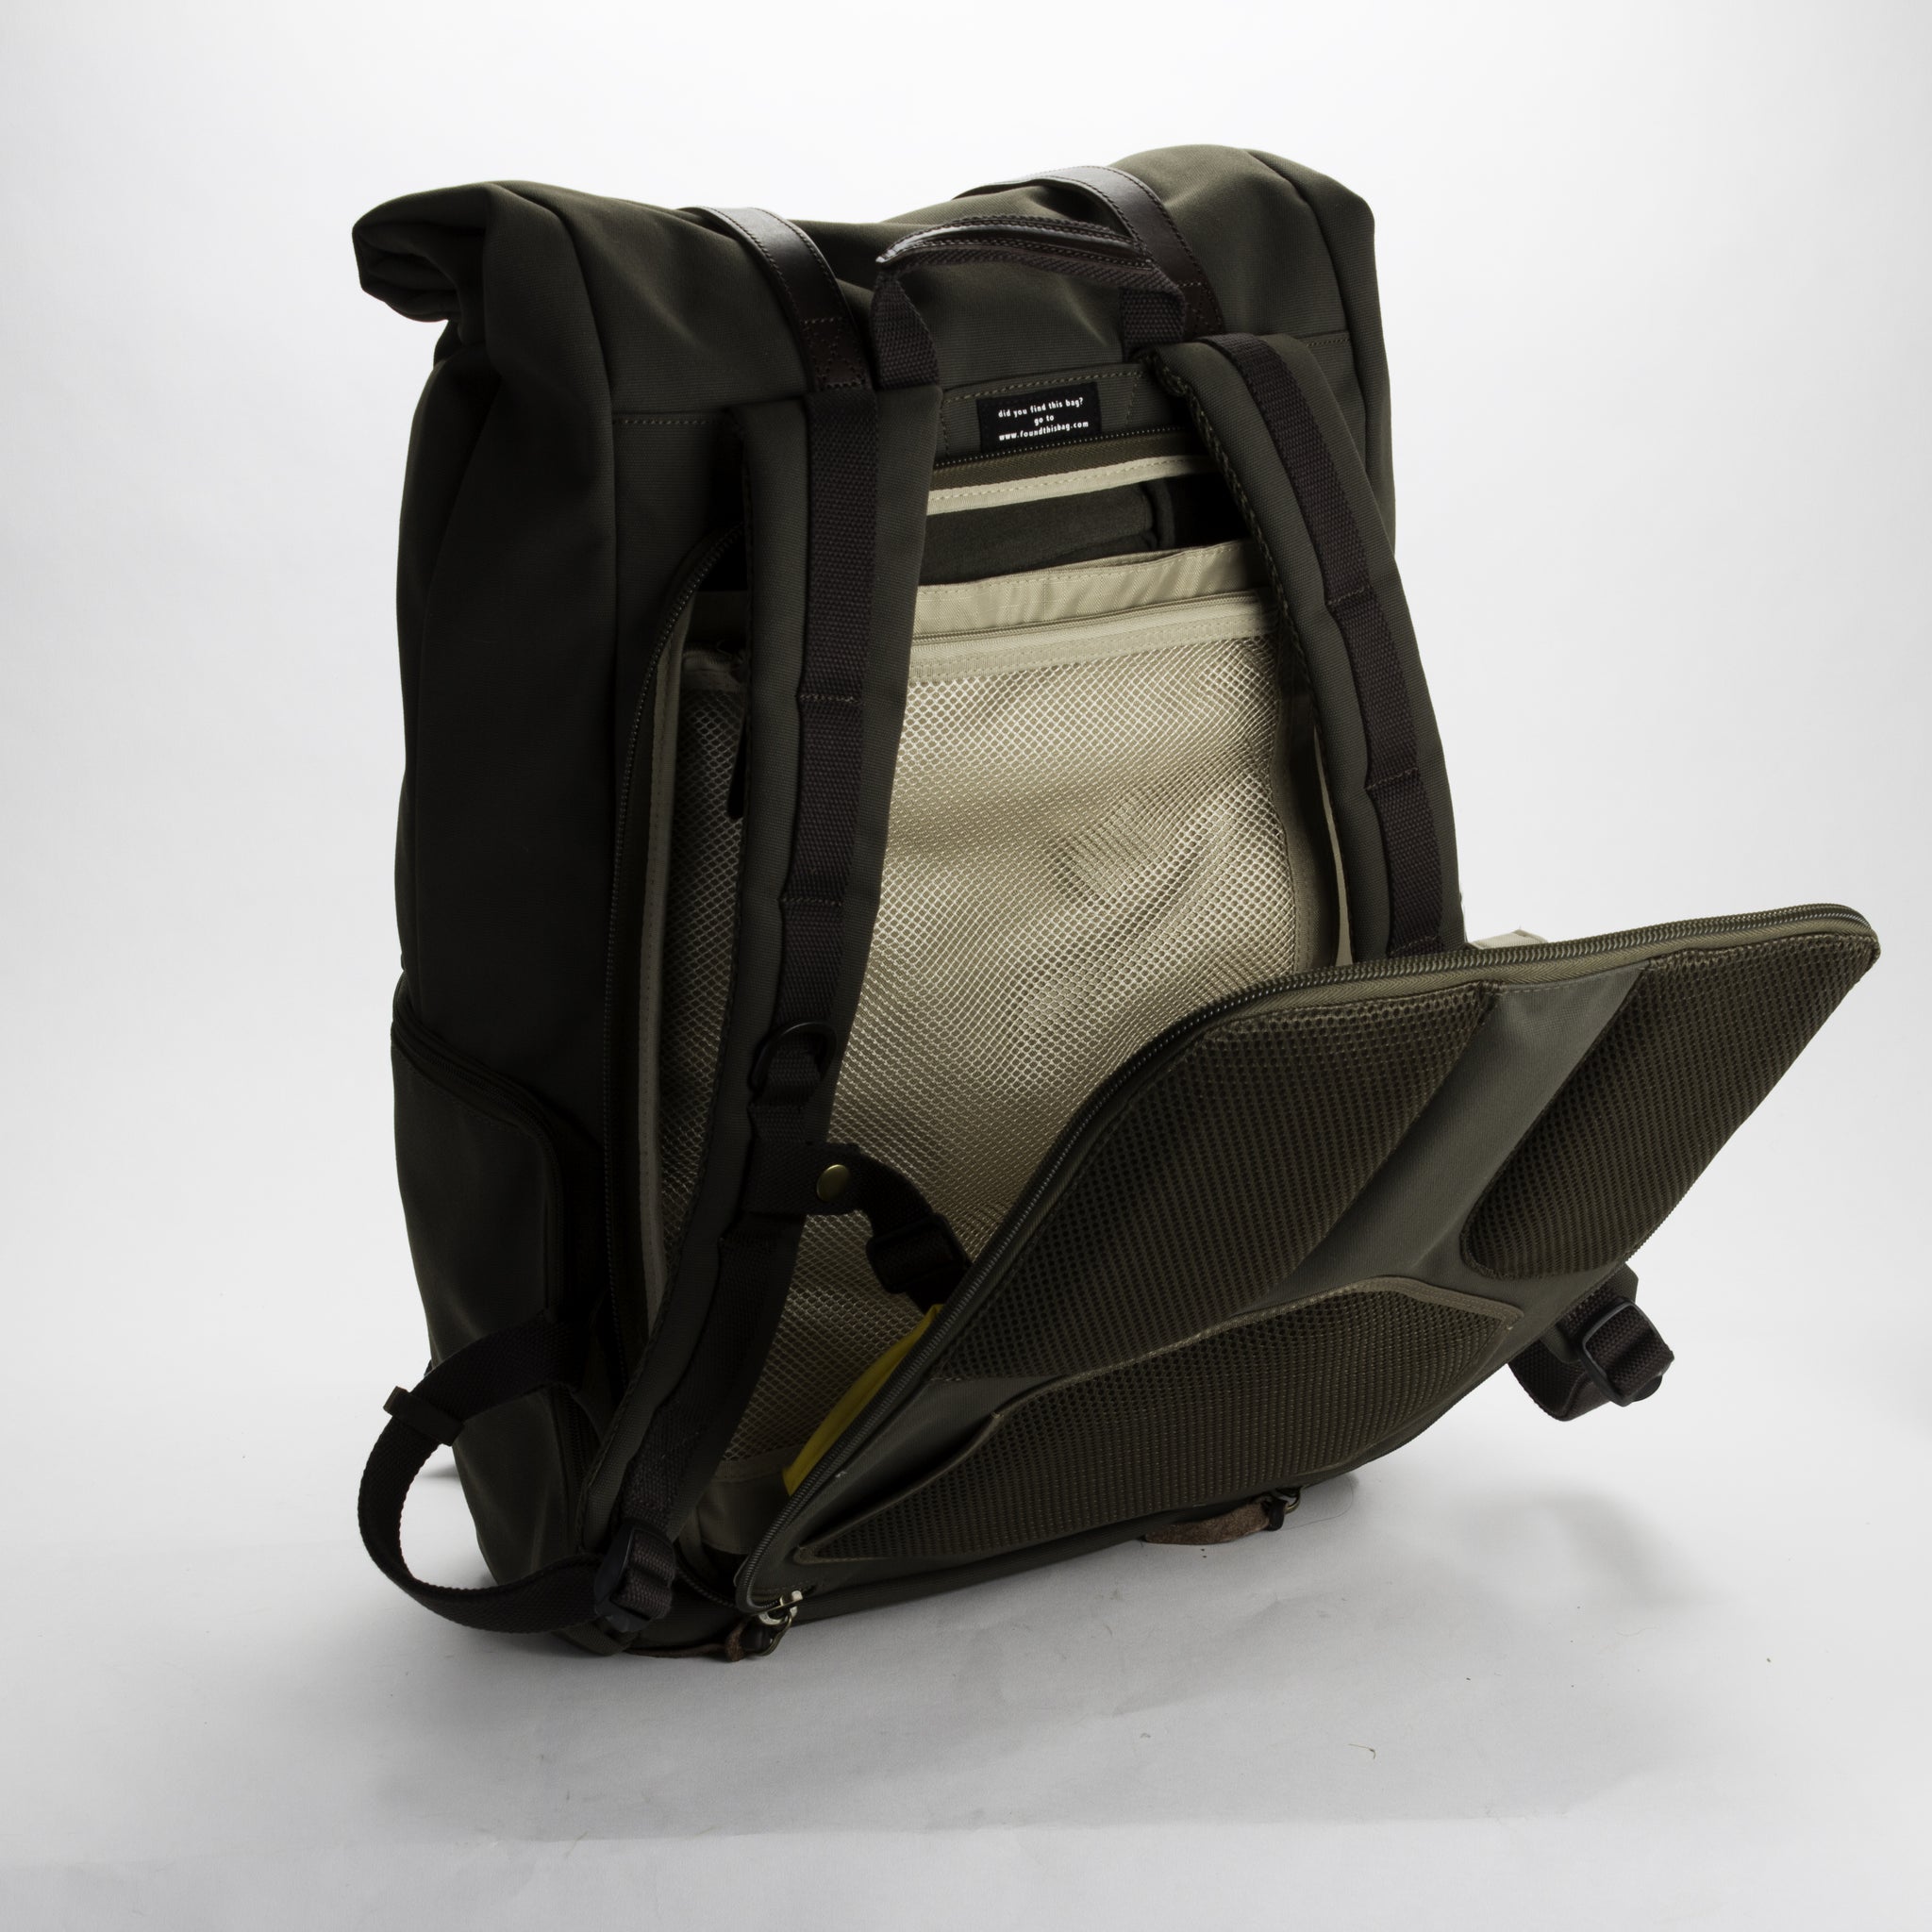 Karl 48h+ Travel Backpack